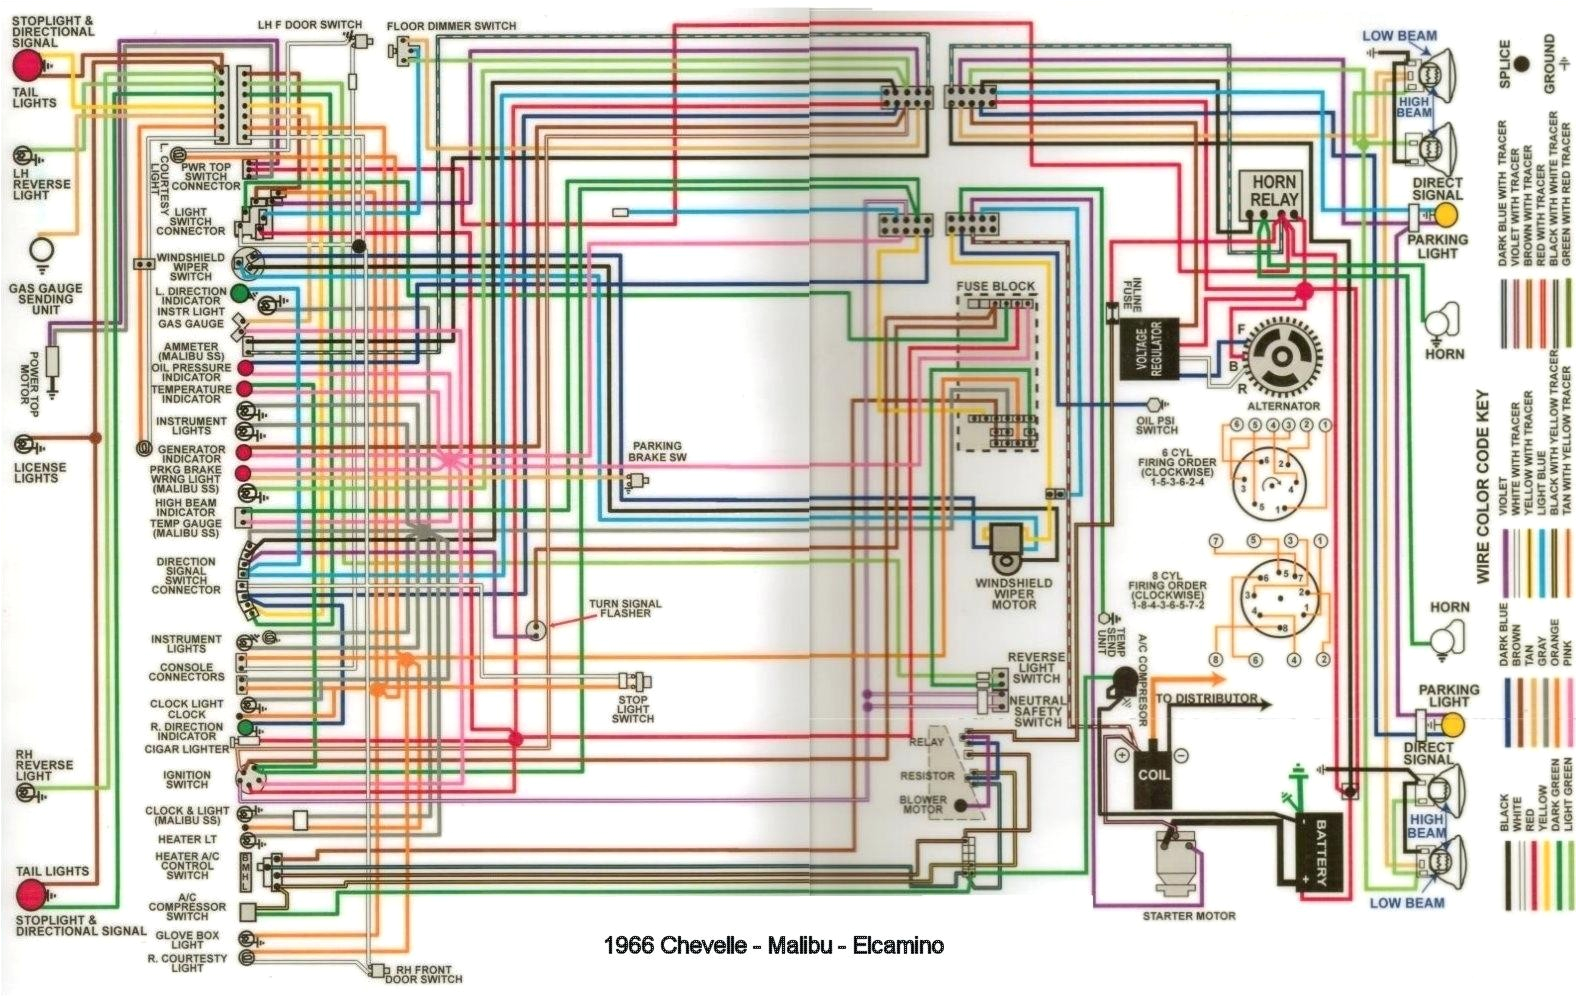 66 chevelle wiring diagram elegant amp gauge wiring diagram 70 chevelle wiring diagram amp fuse